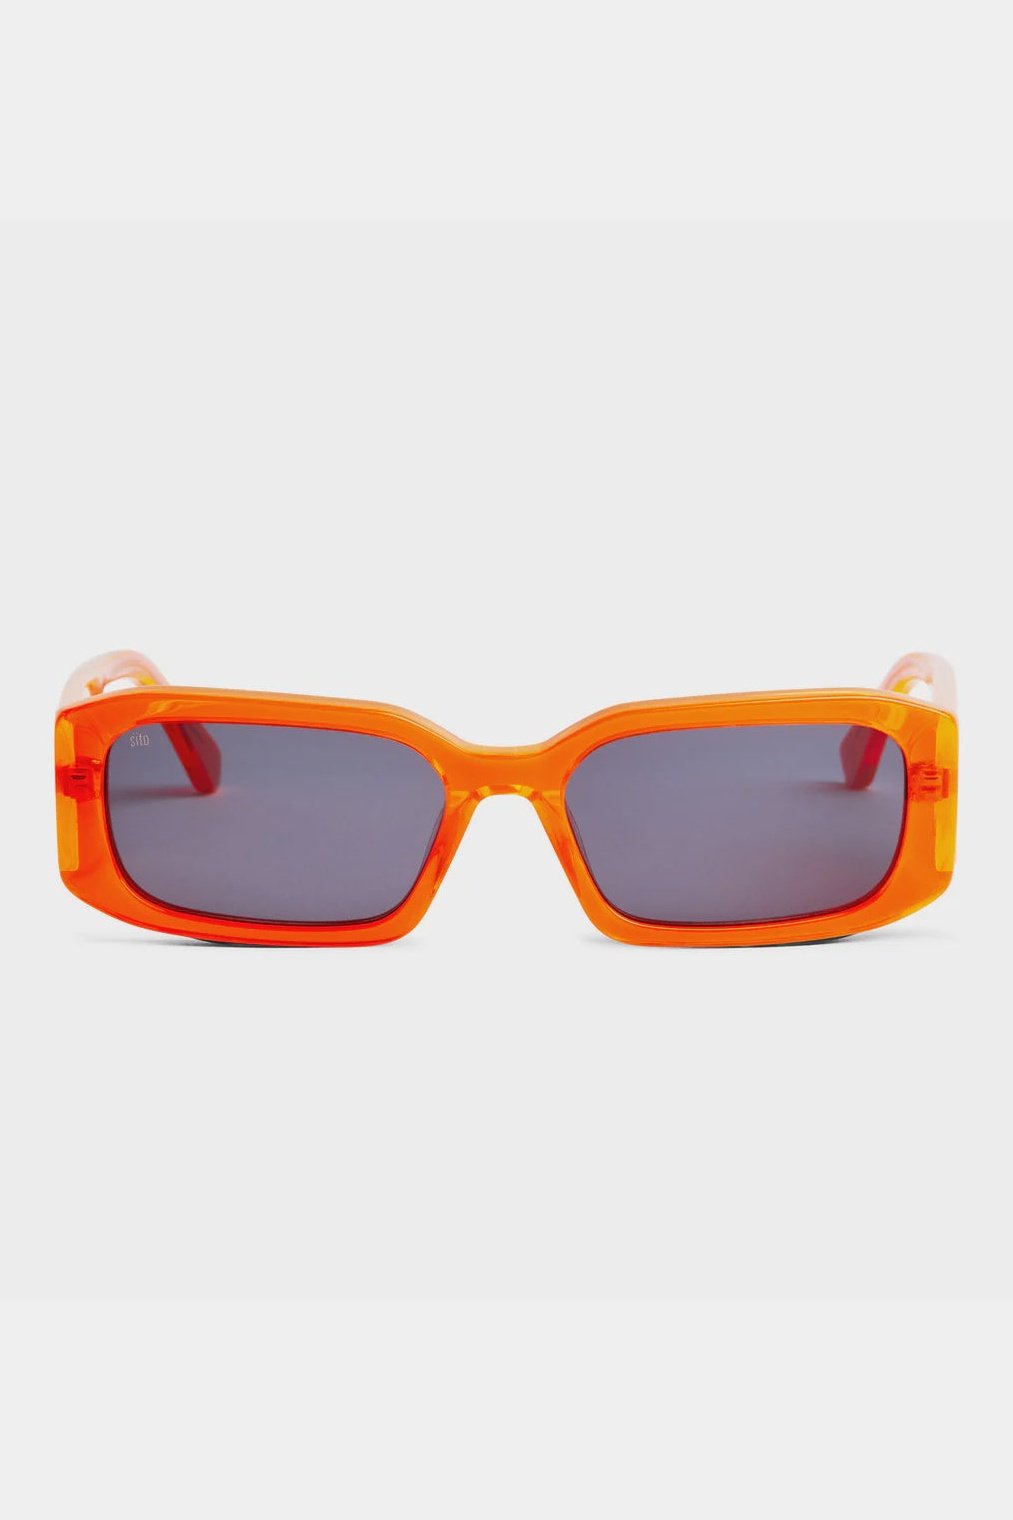 Sito electric vision - neon orange/smokey grey